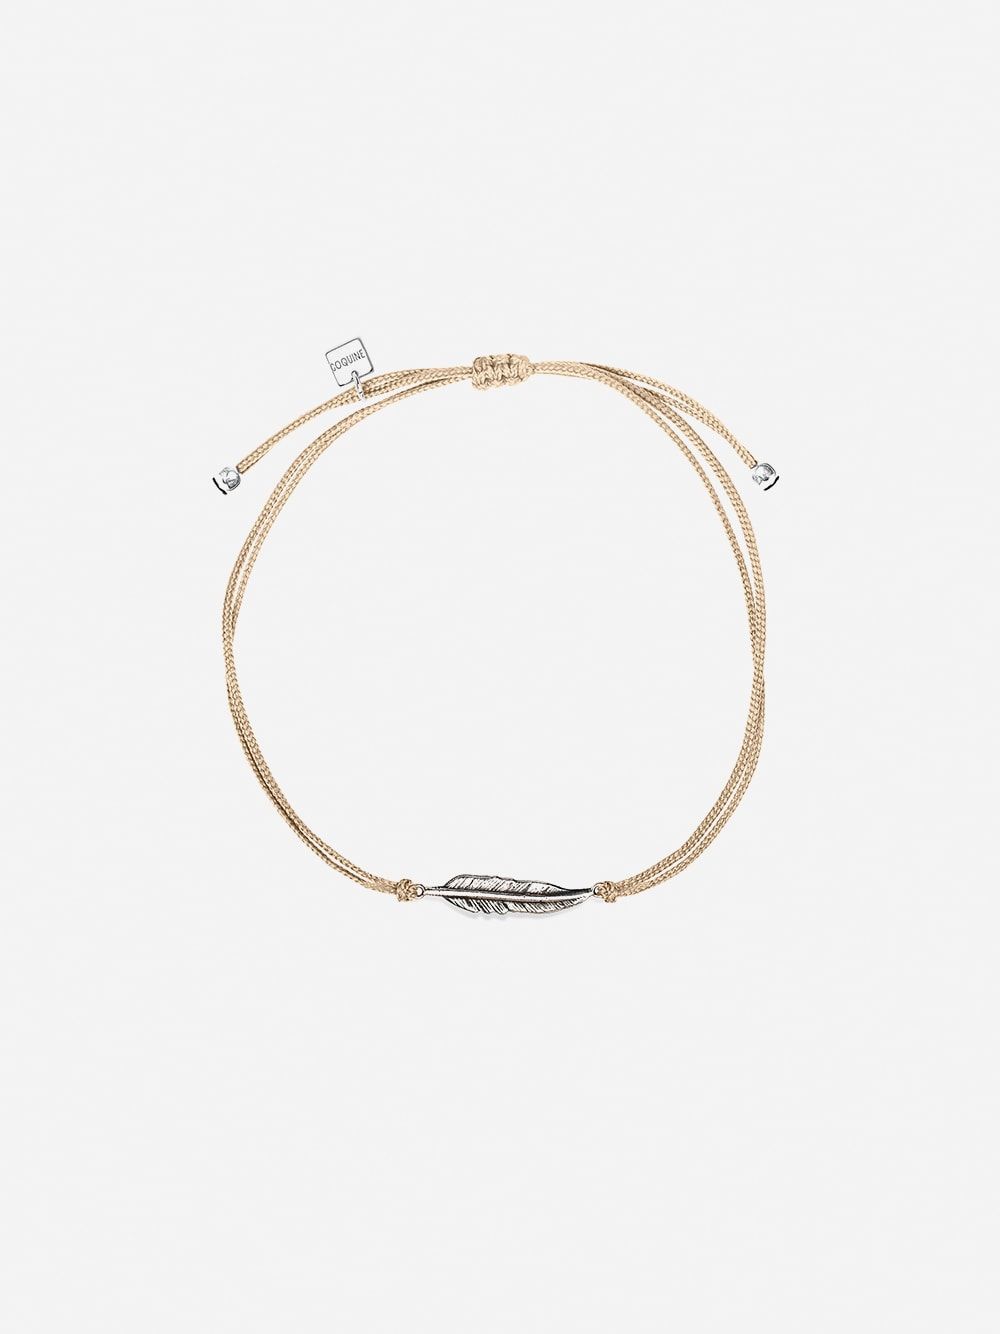 Silver Bracelet Boho Feather | Coquine Jewelry